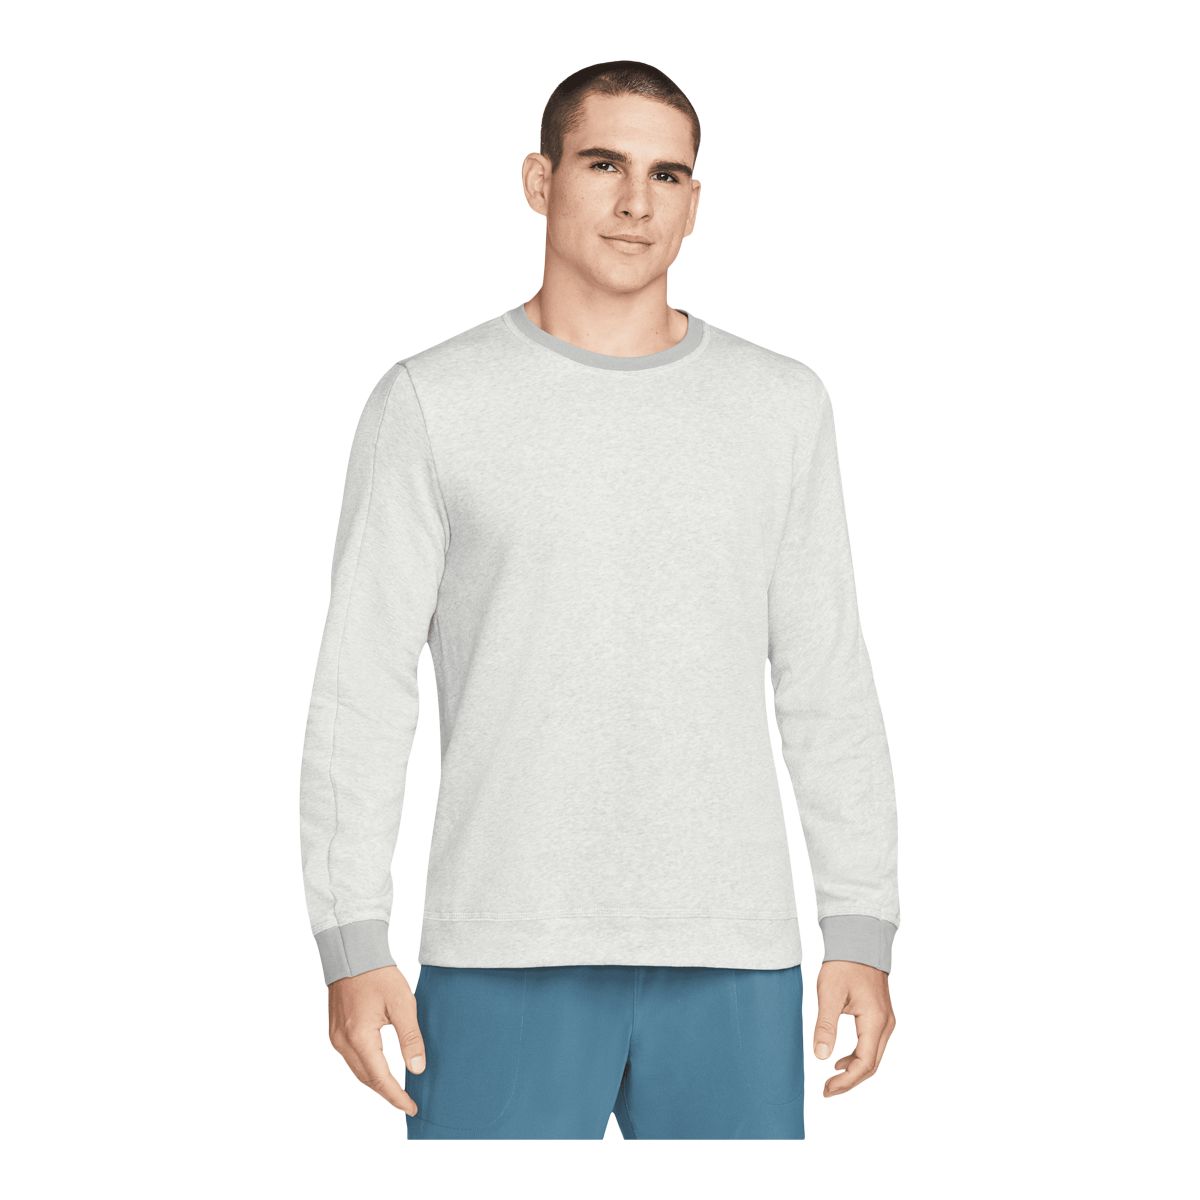 Nike Men's Yoga Core Sweatshirt